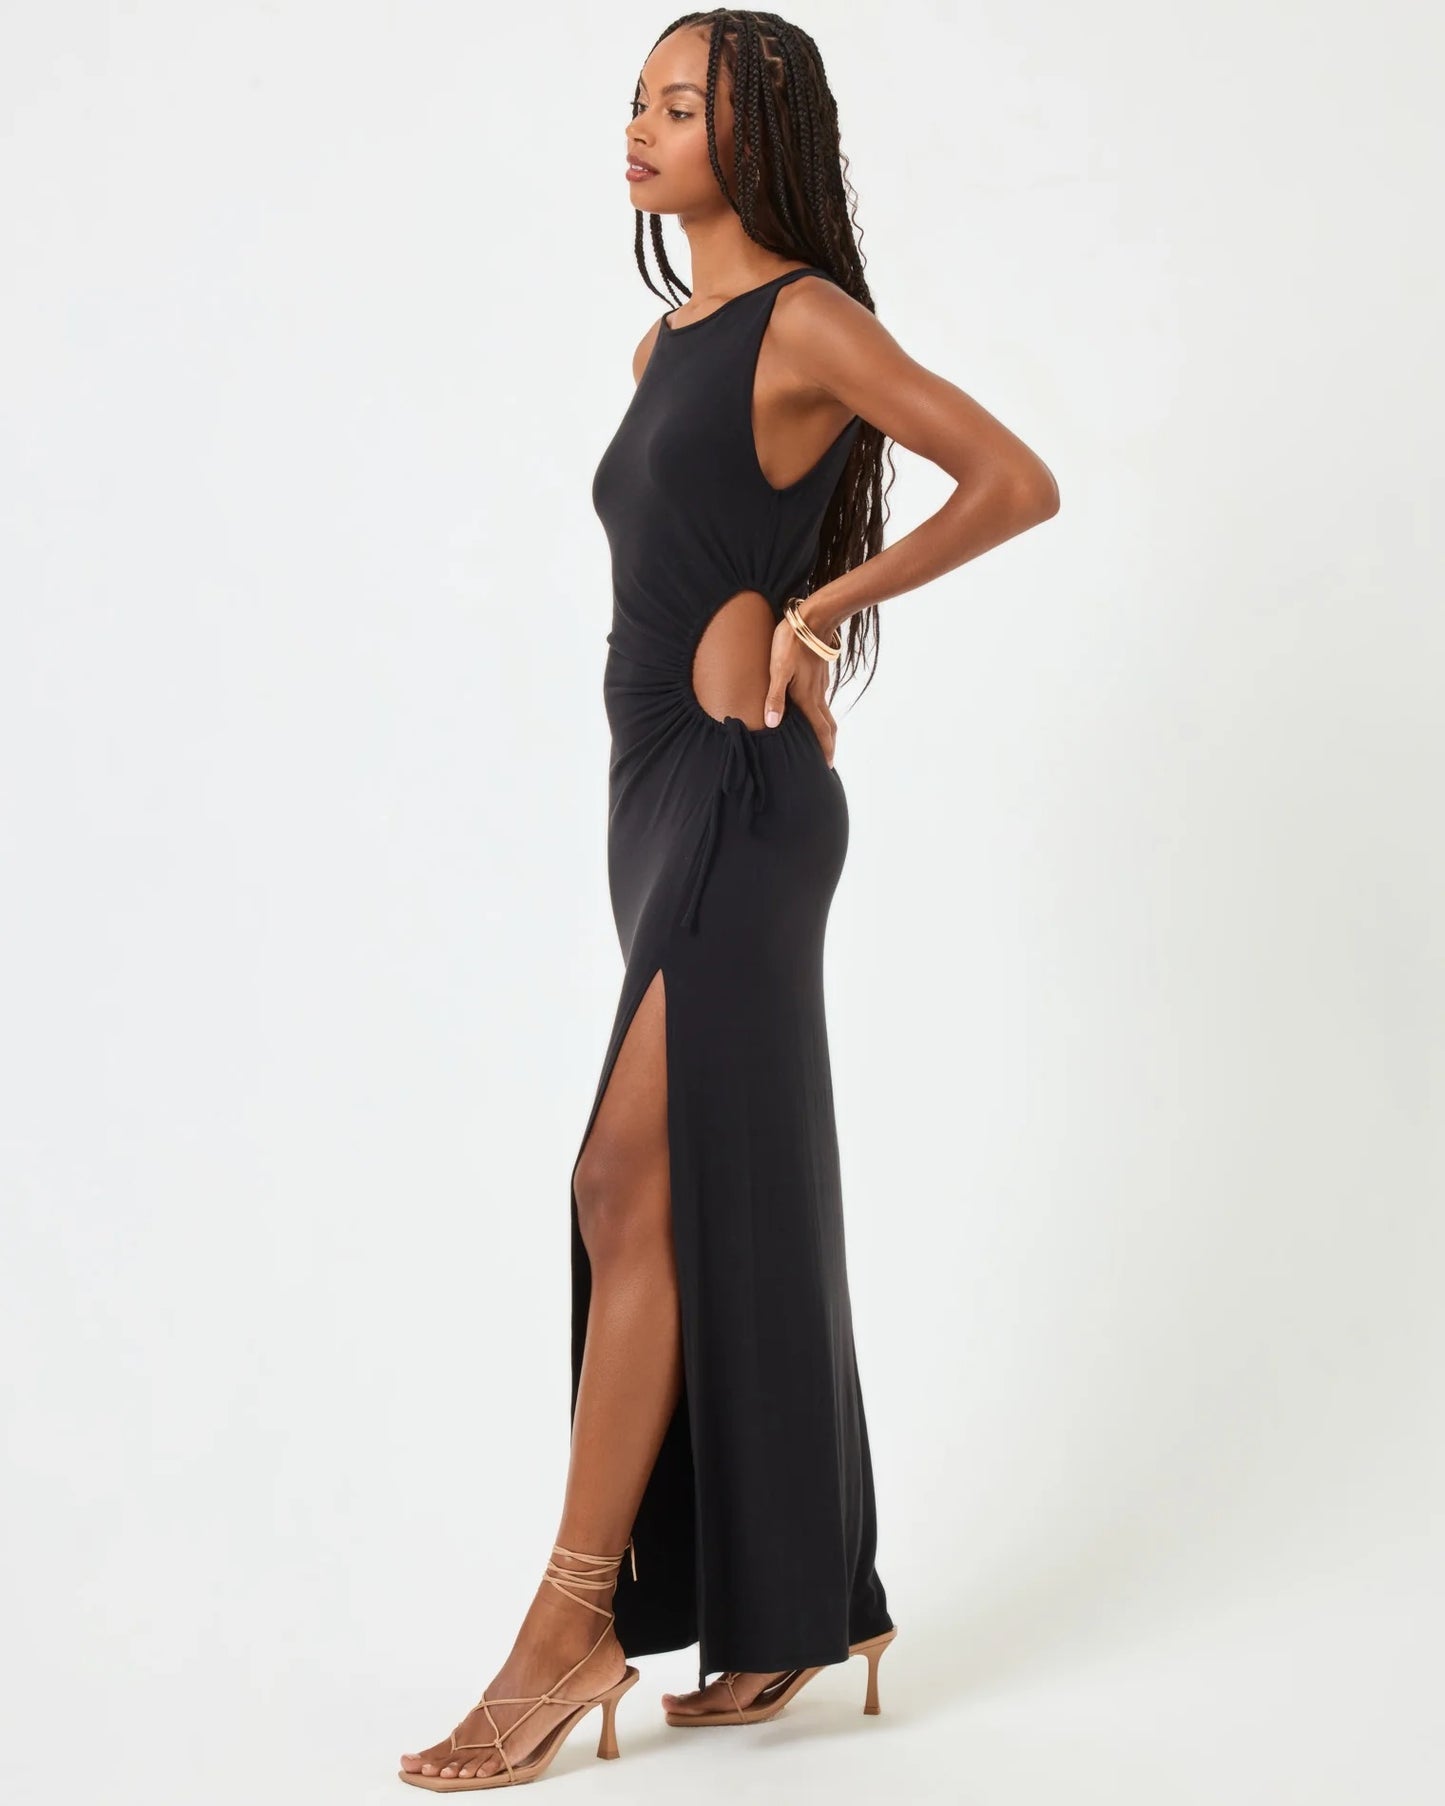 LSpace Tiana Cutout Dress in Black